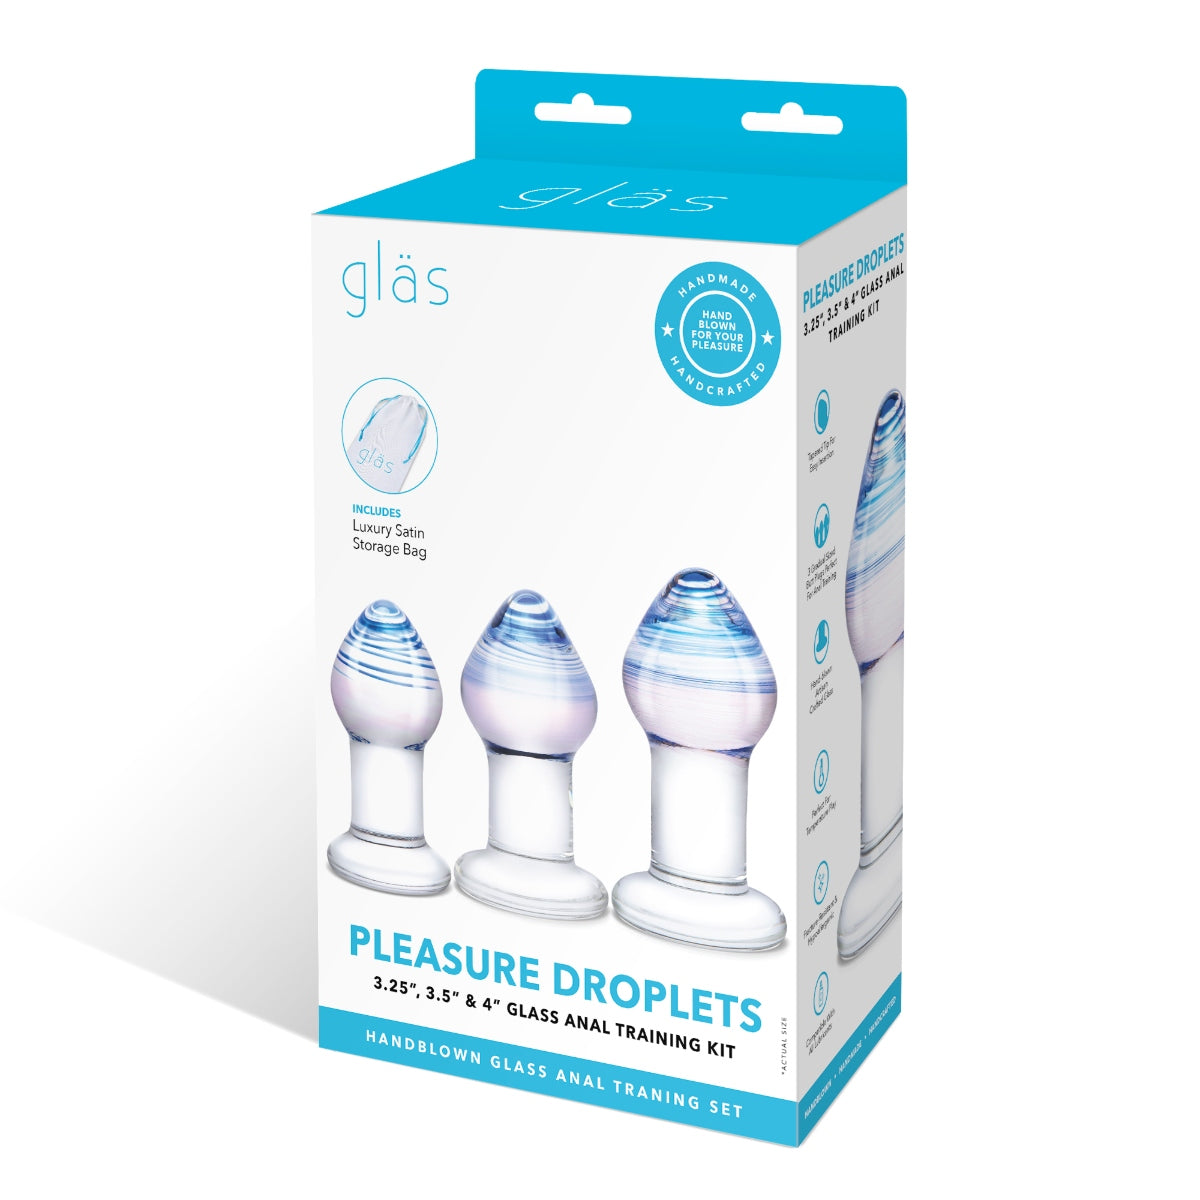 Glas | Pleasure Droplets Glass Anal Training Kit